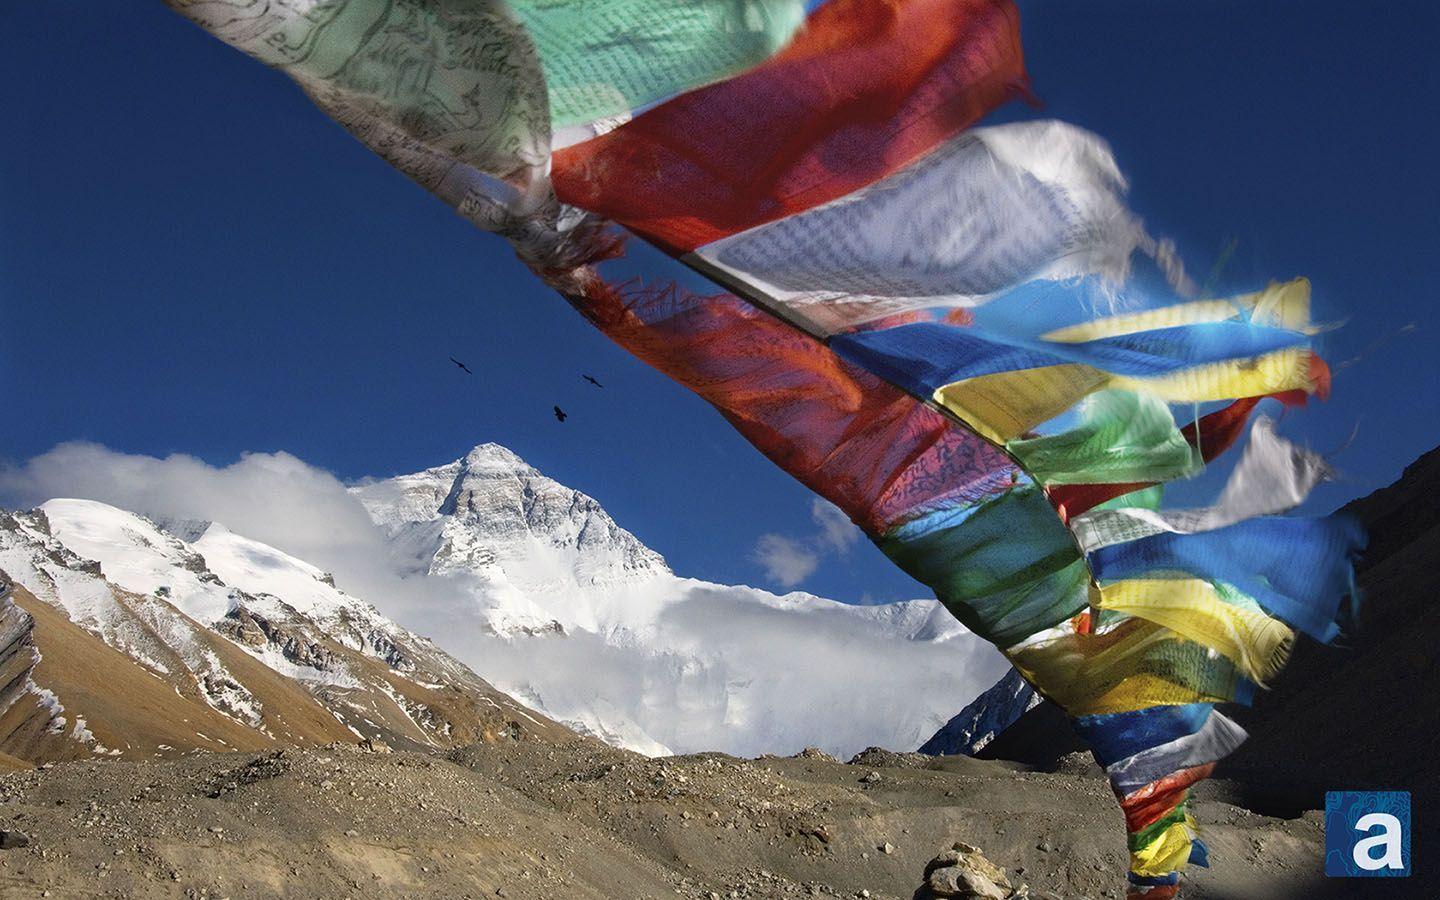 Wallpaper Wednesday: Mt. Everest and Prayer Flags